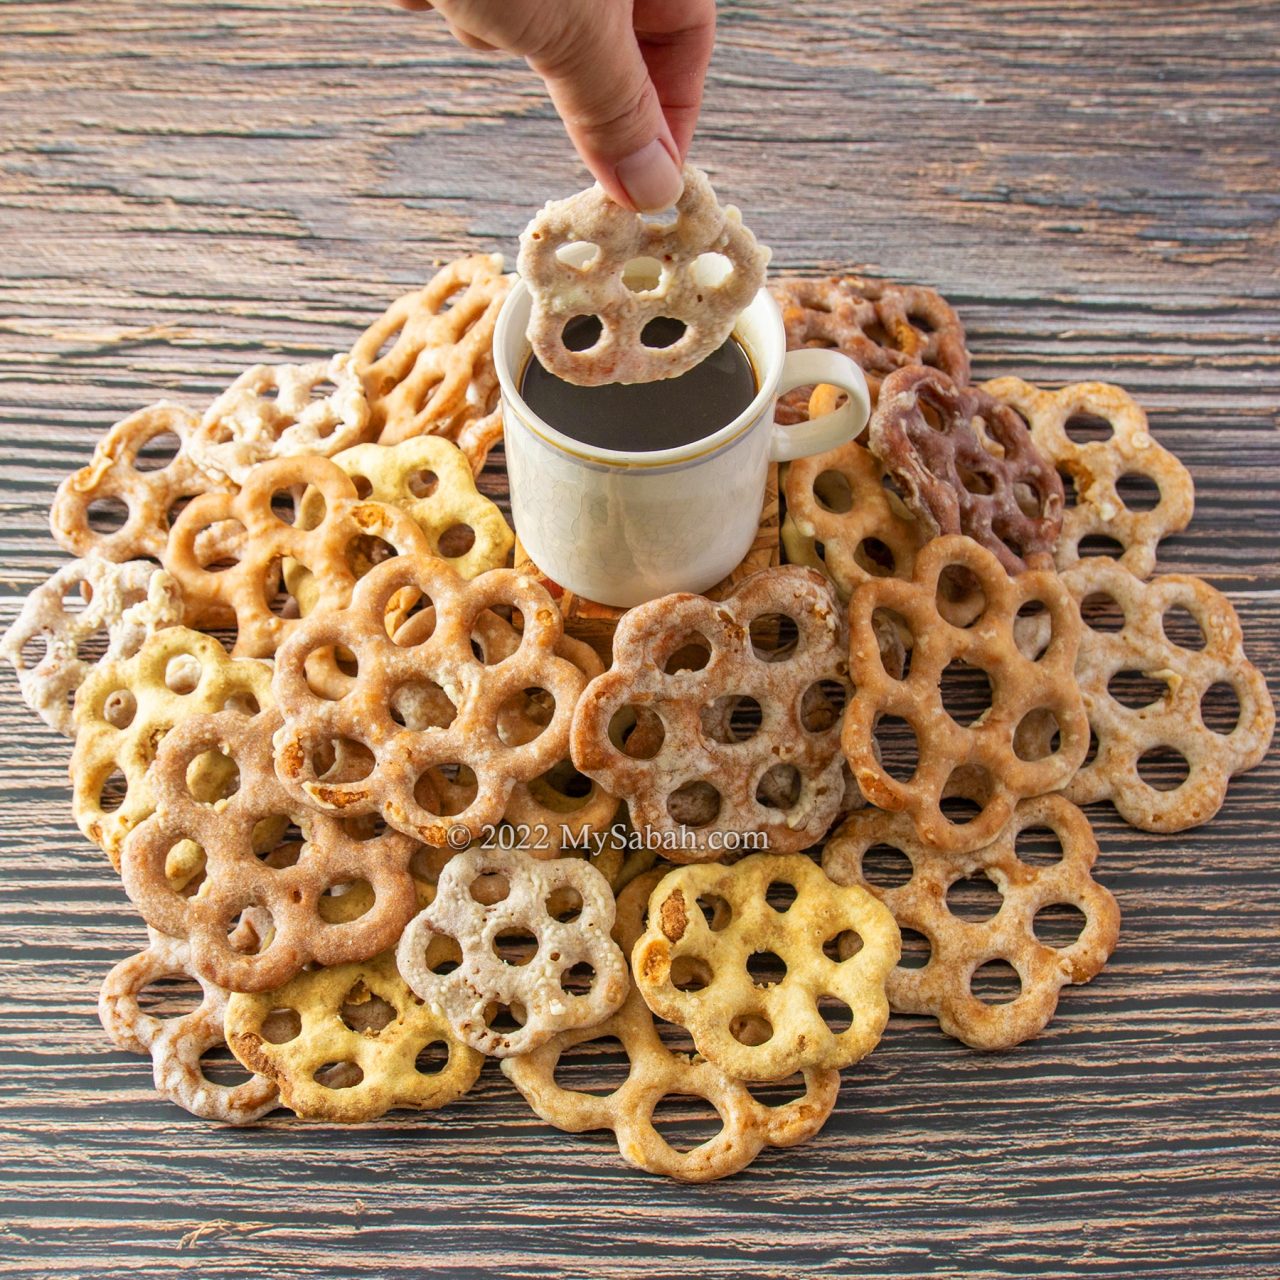 Dunking kuih cincin into coffee